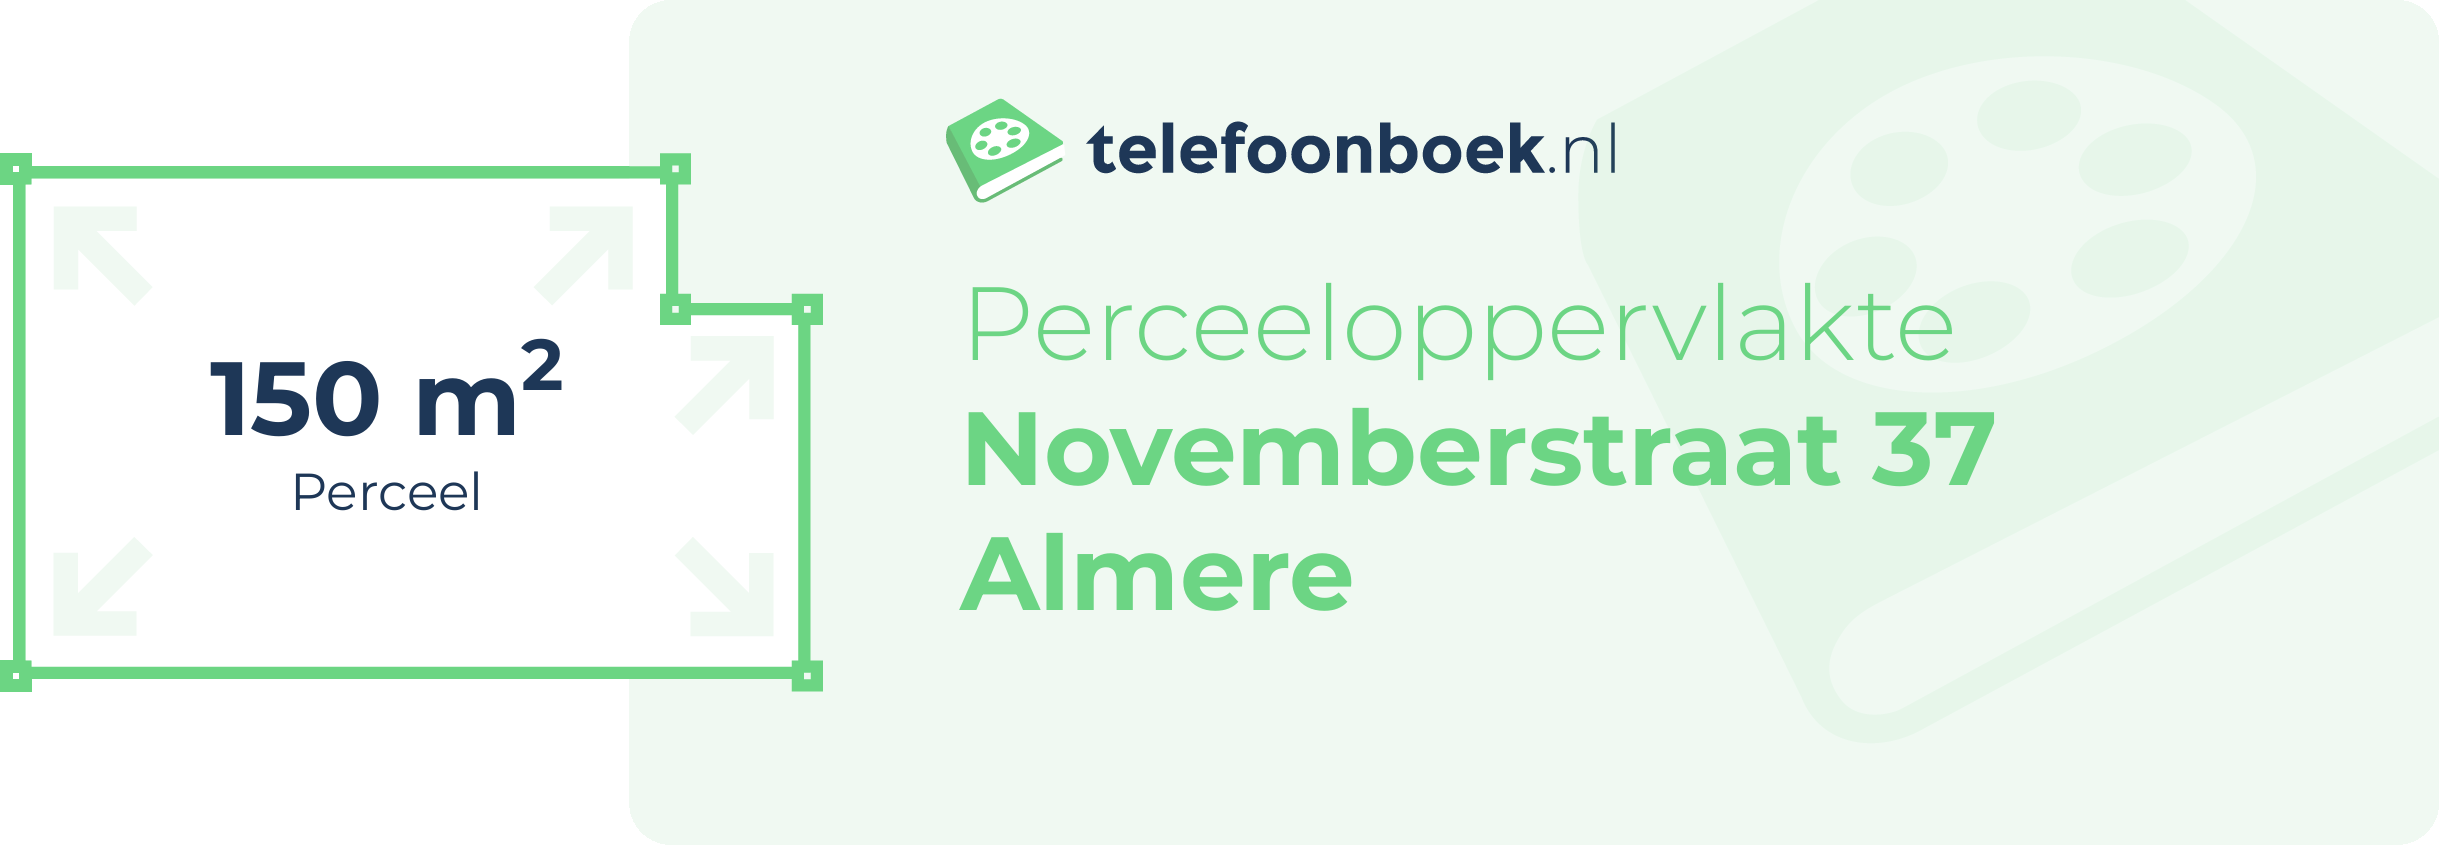 Perceeloppervlakte Novemberstraat 37 Almere